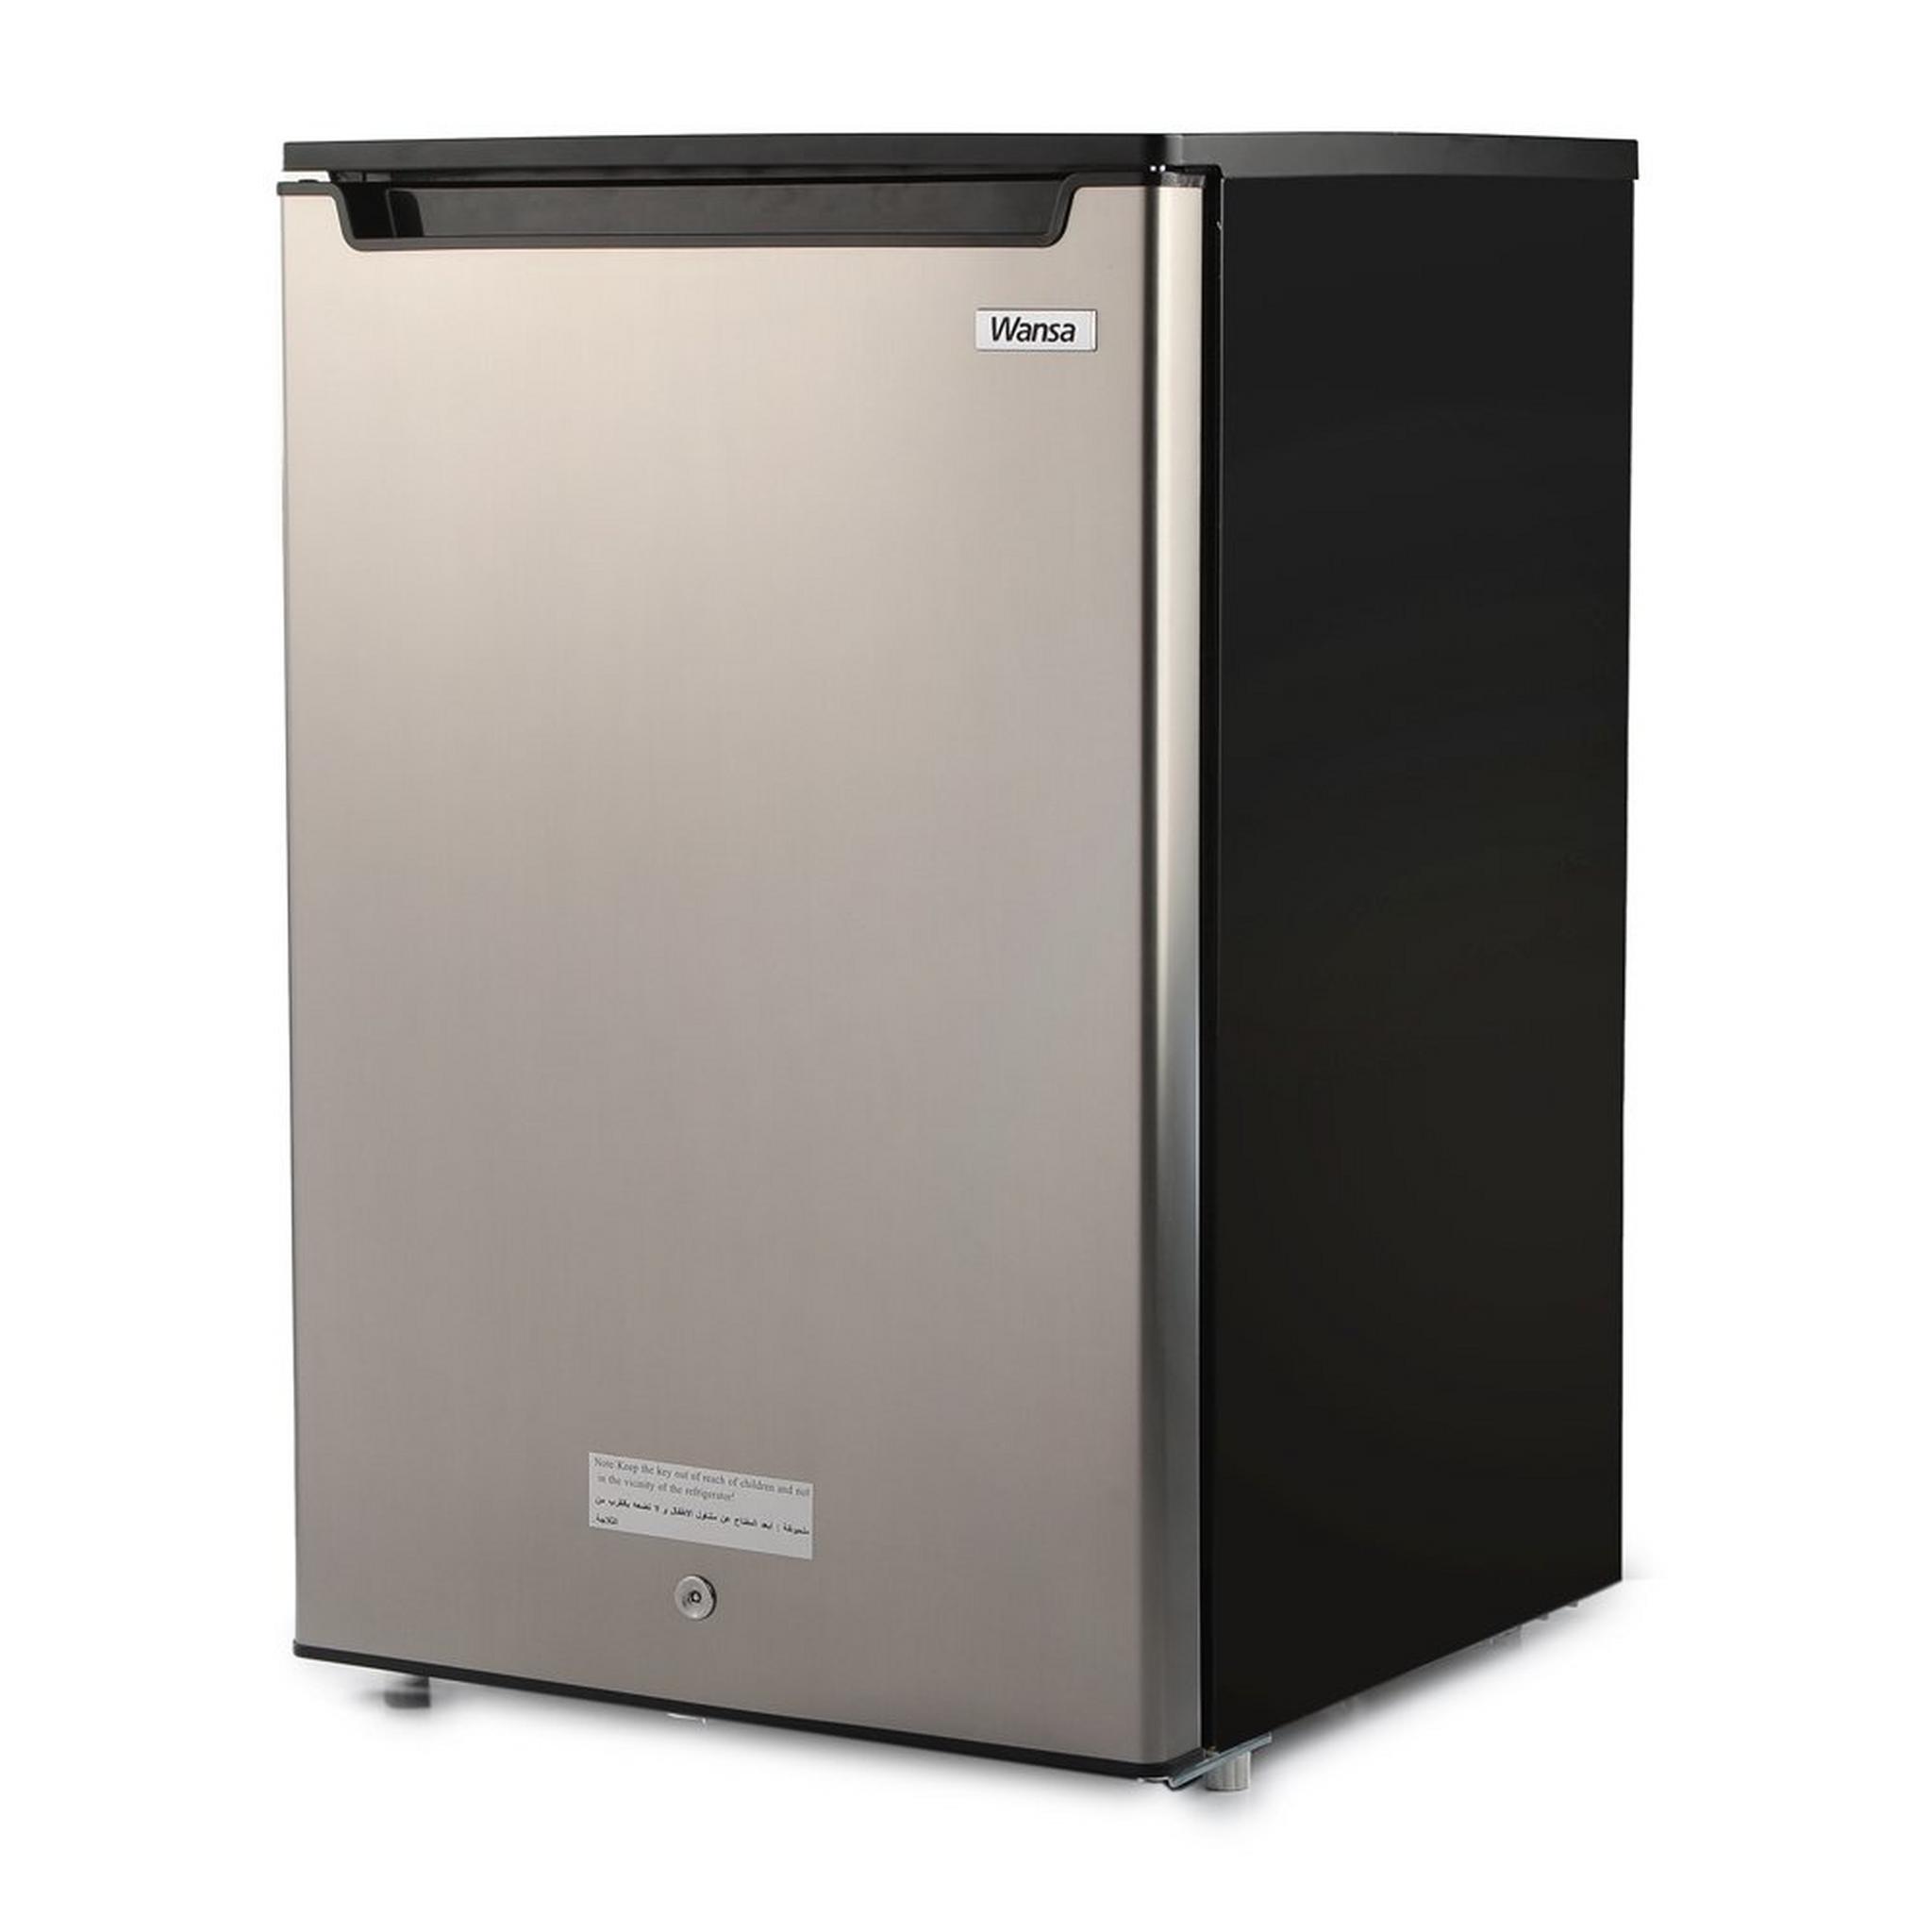 Wansa 3.5 Cft. Upright Freezer – Stainless Steel